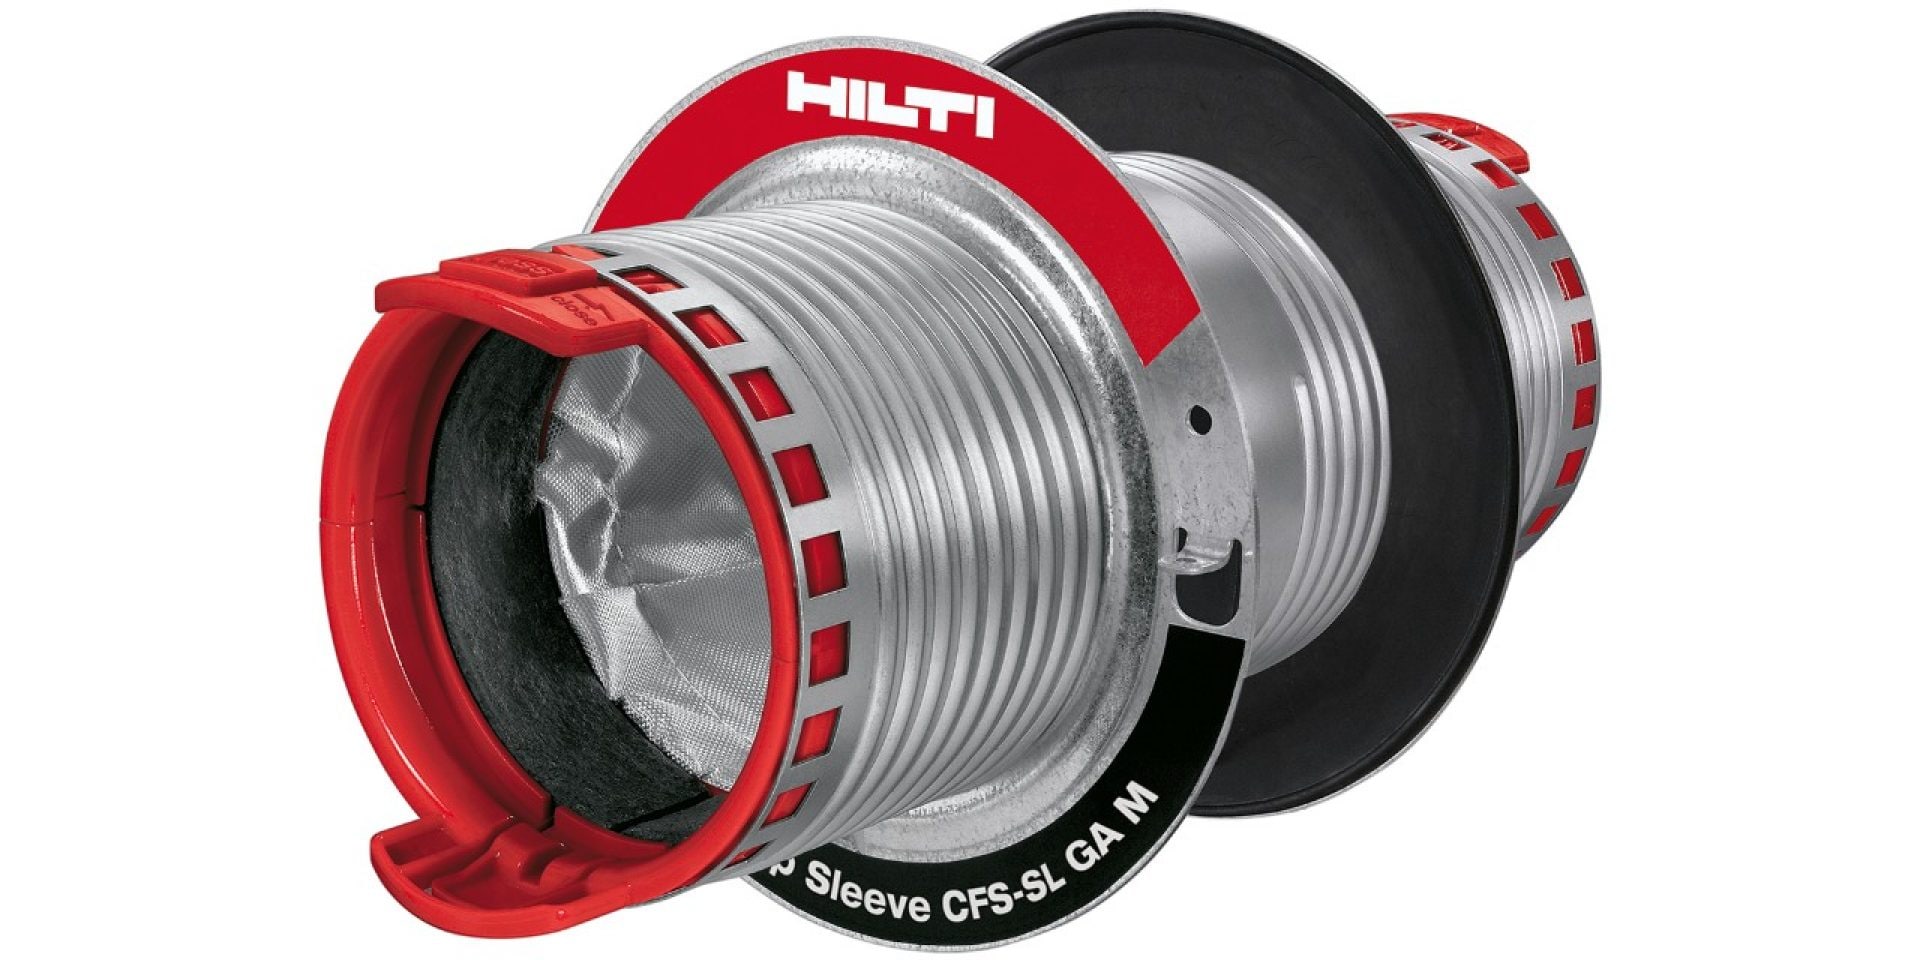 Hilti firestop sleeves CP 653